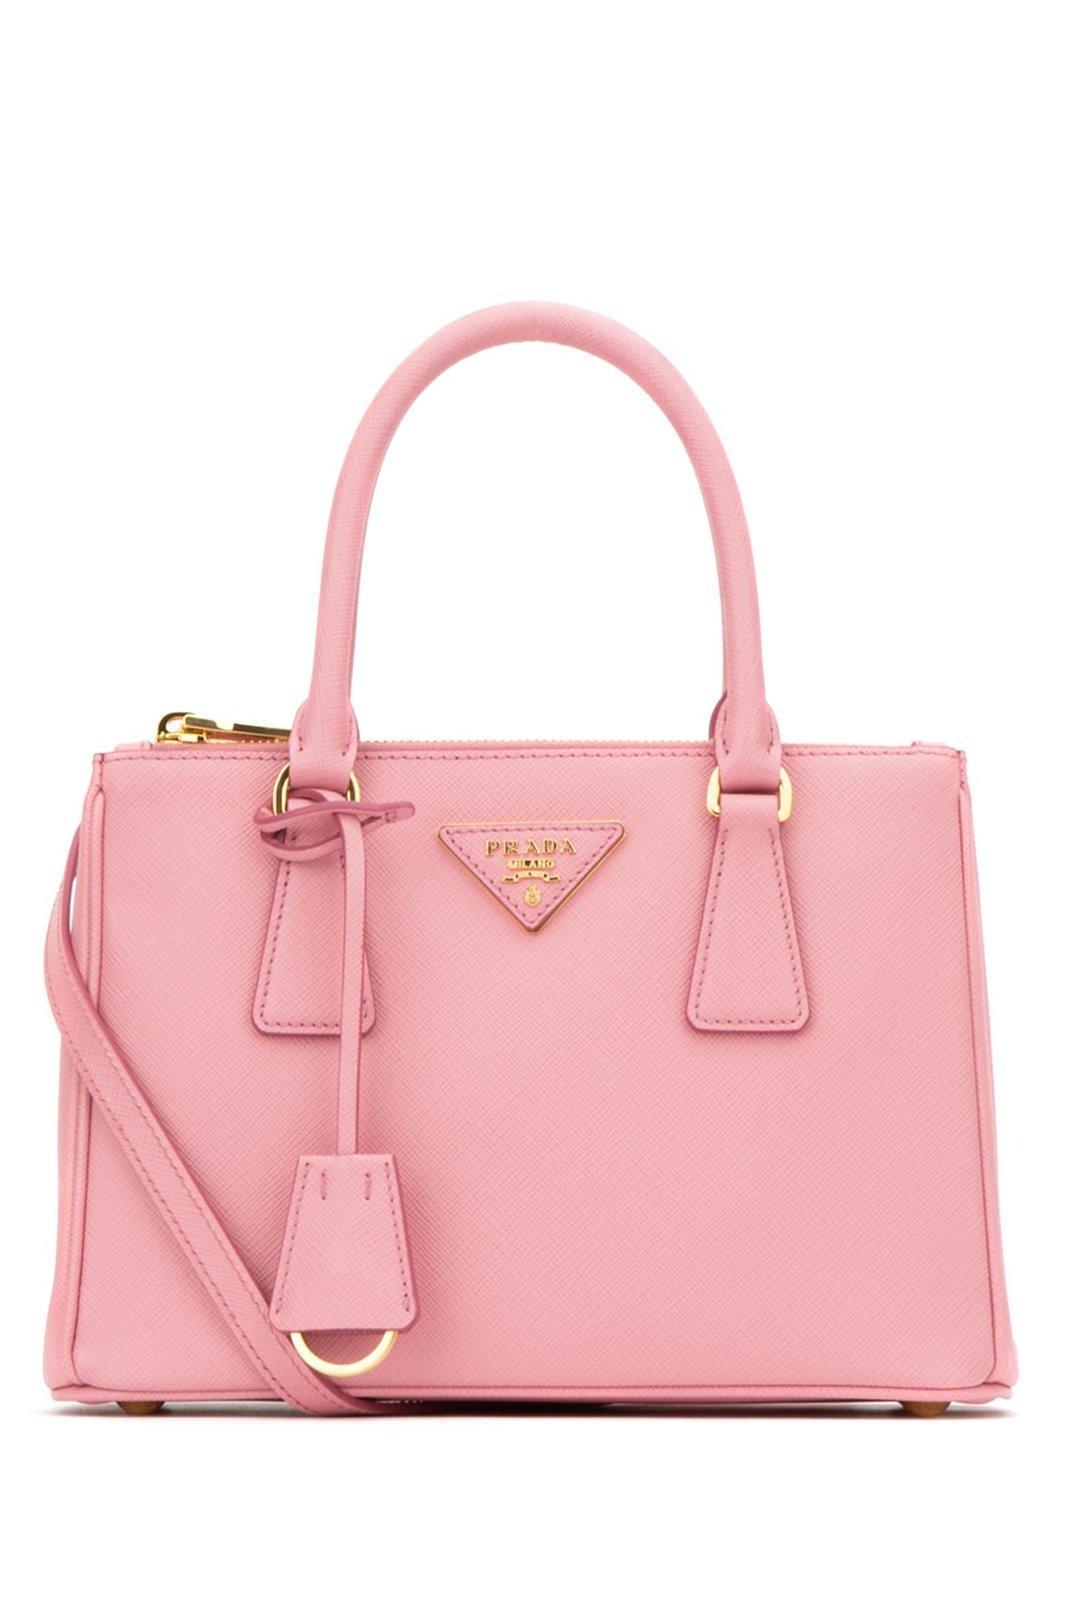 Prada Galleria Mini Tote Bag in Pink | Lyst